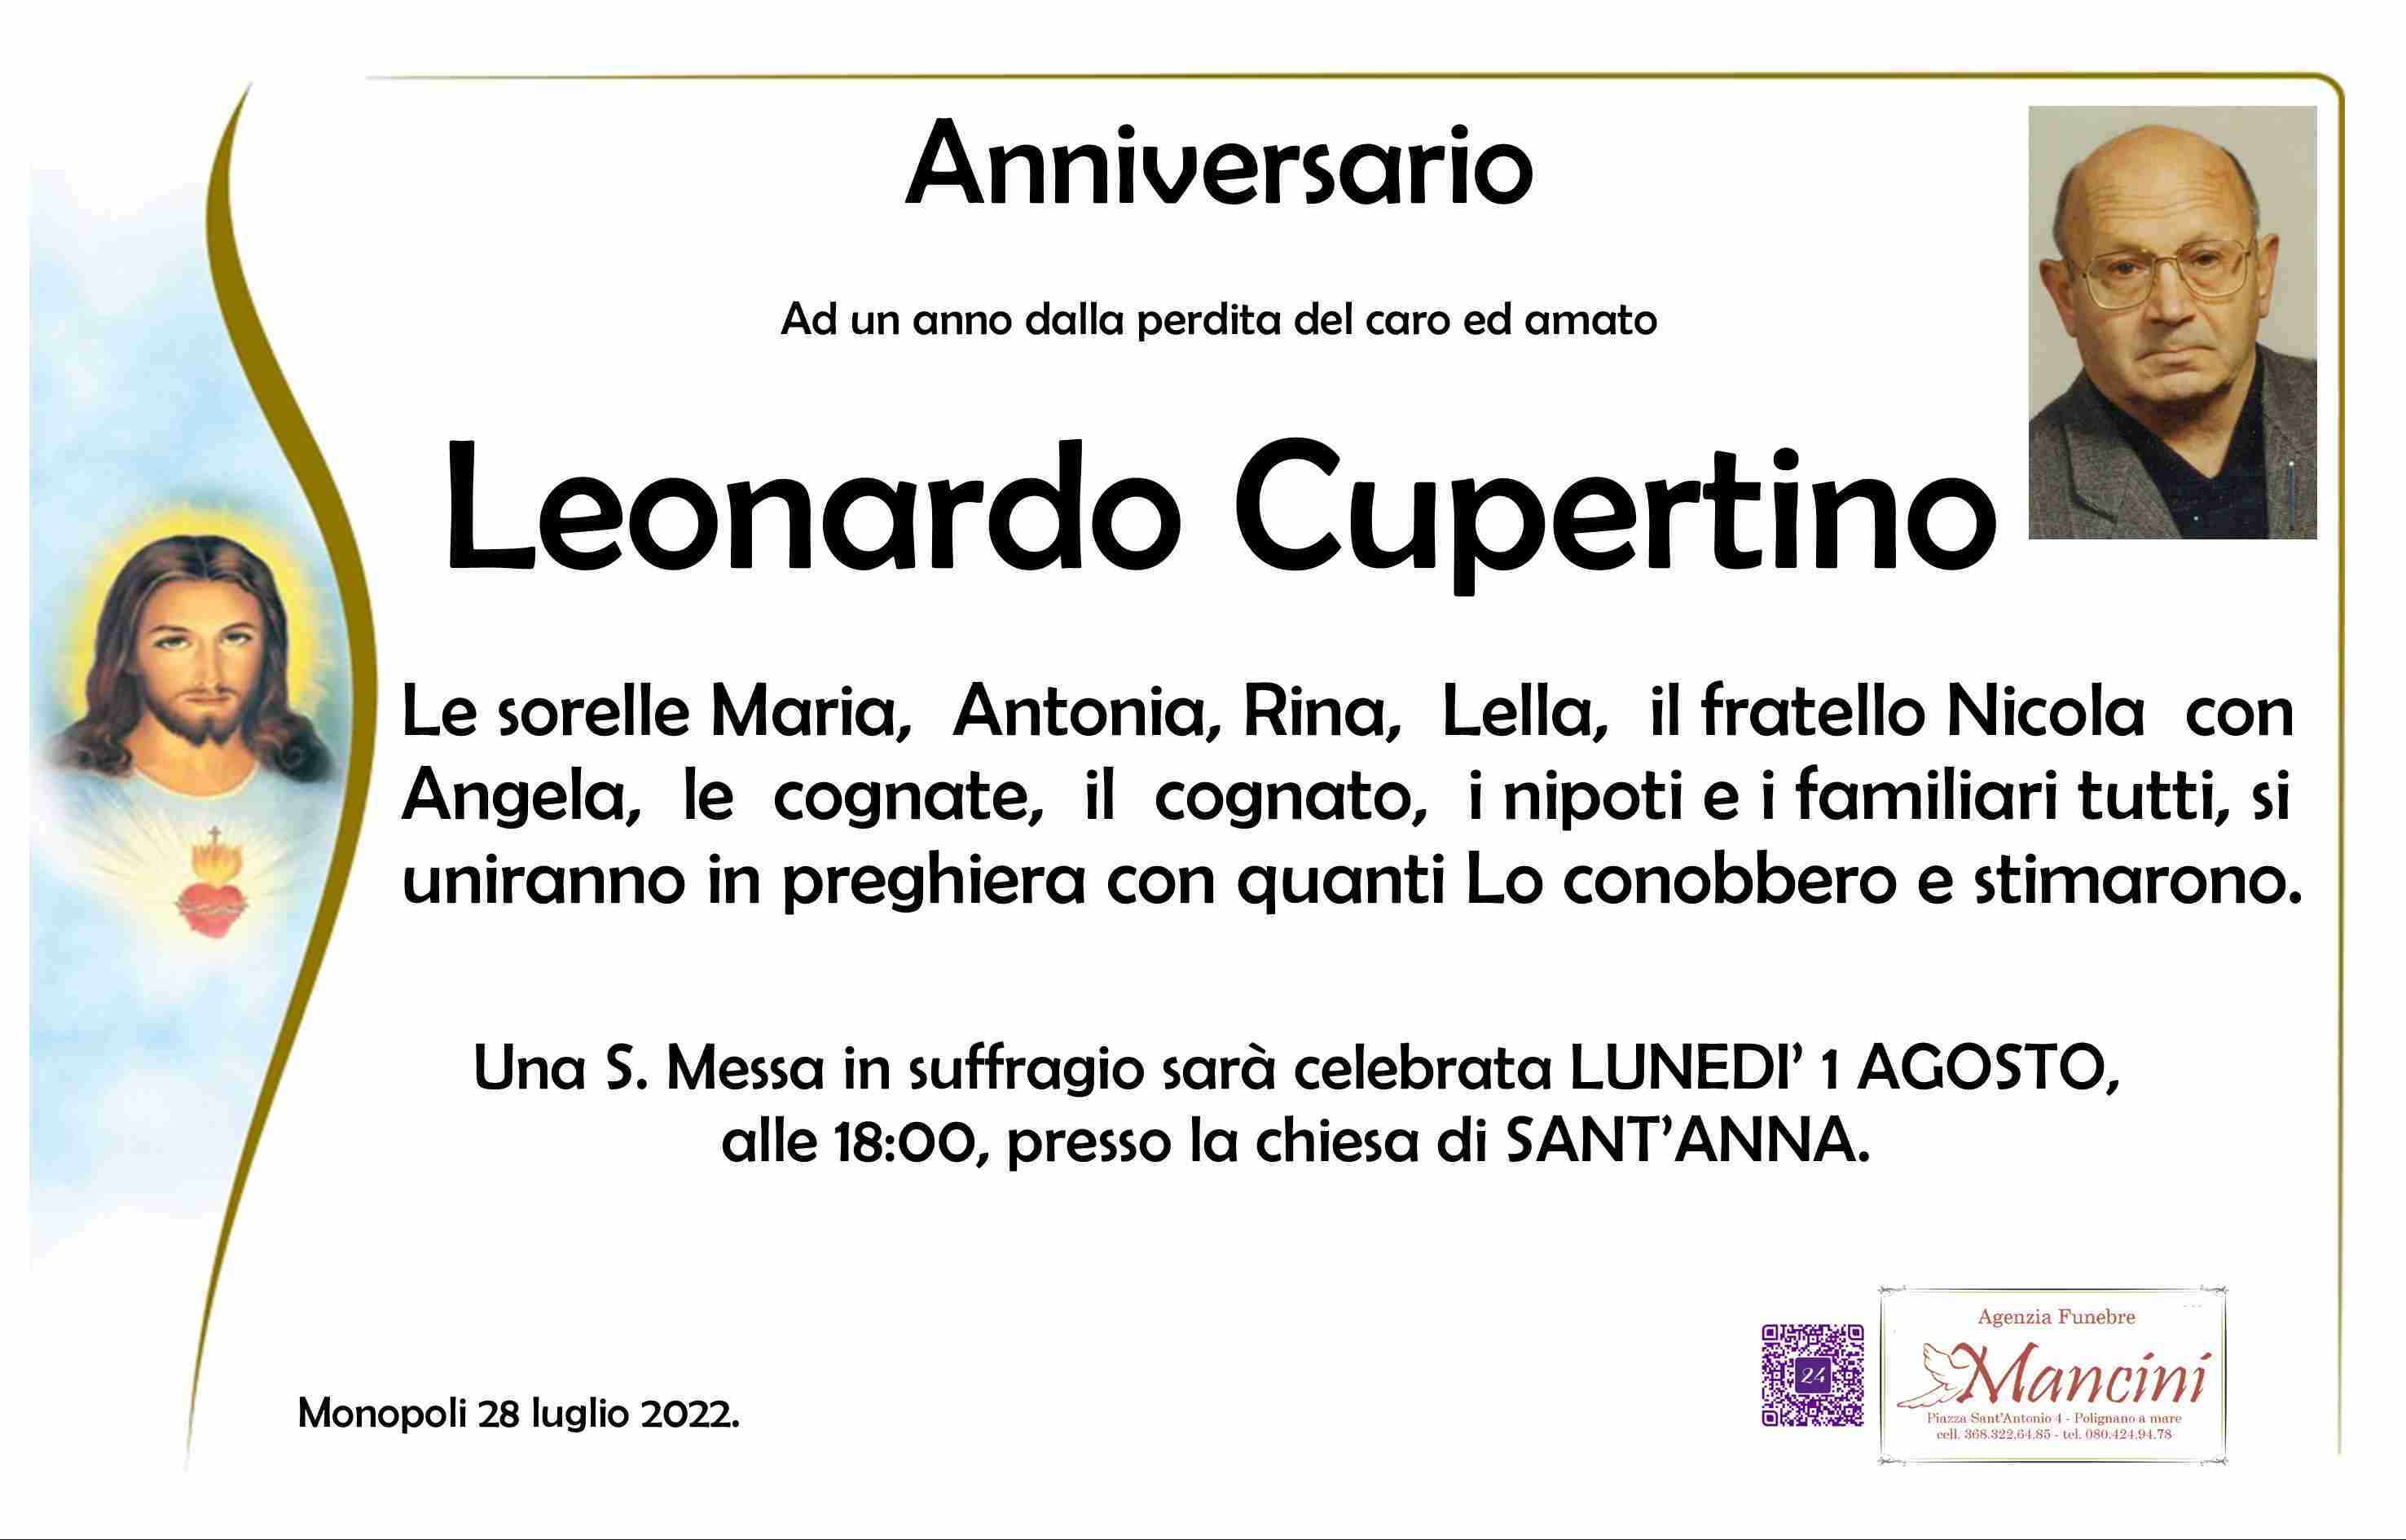 Leonardo Cupertino